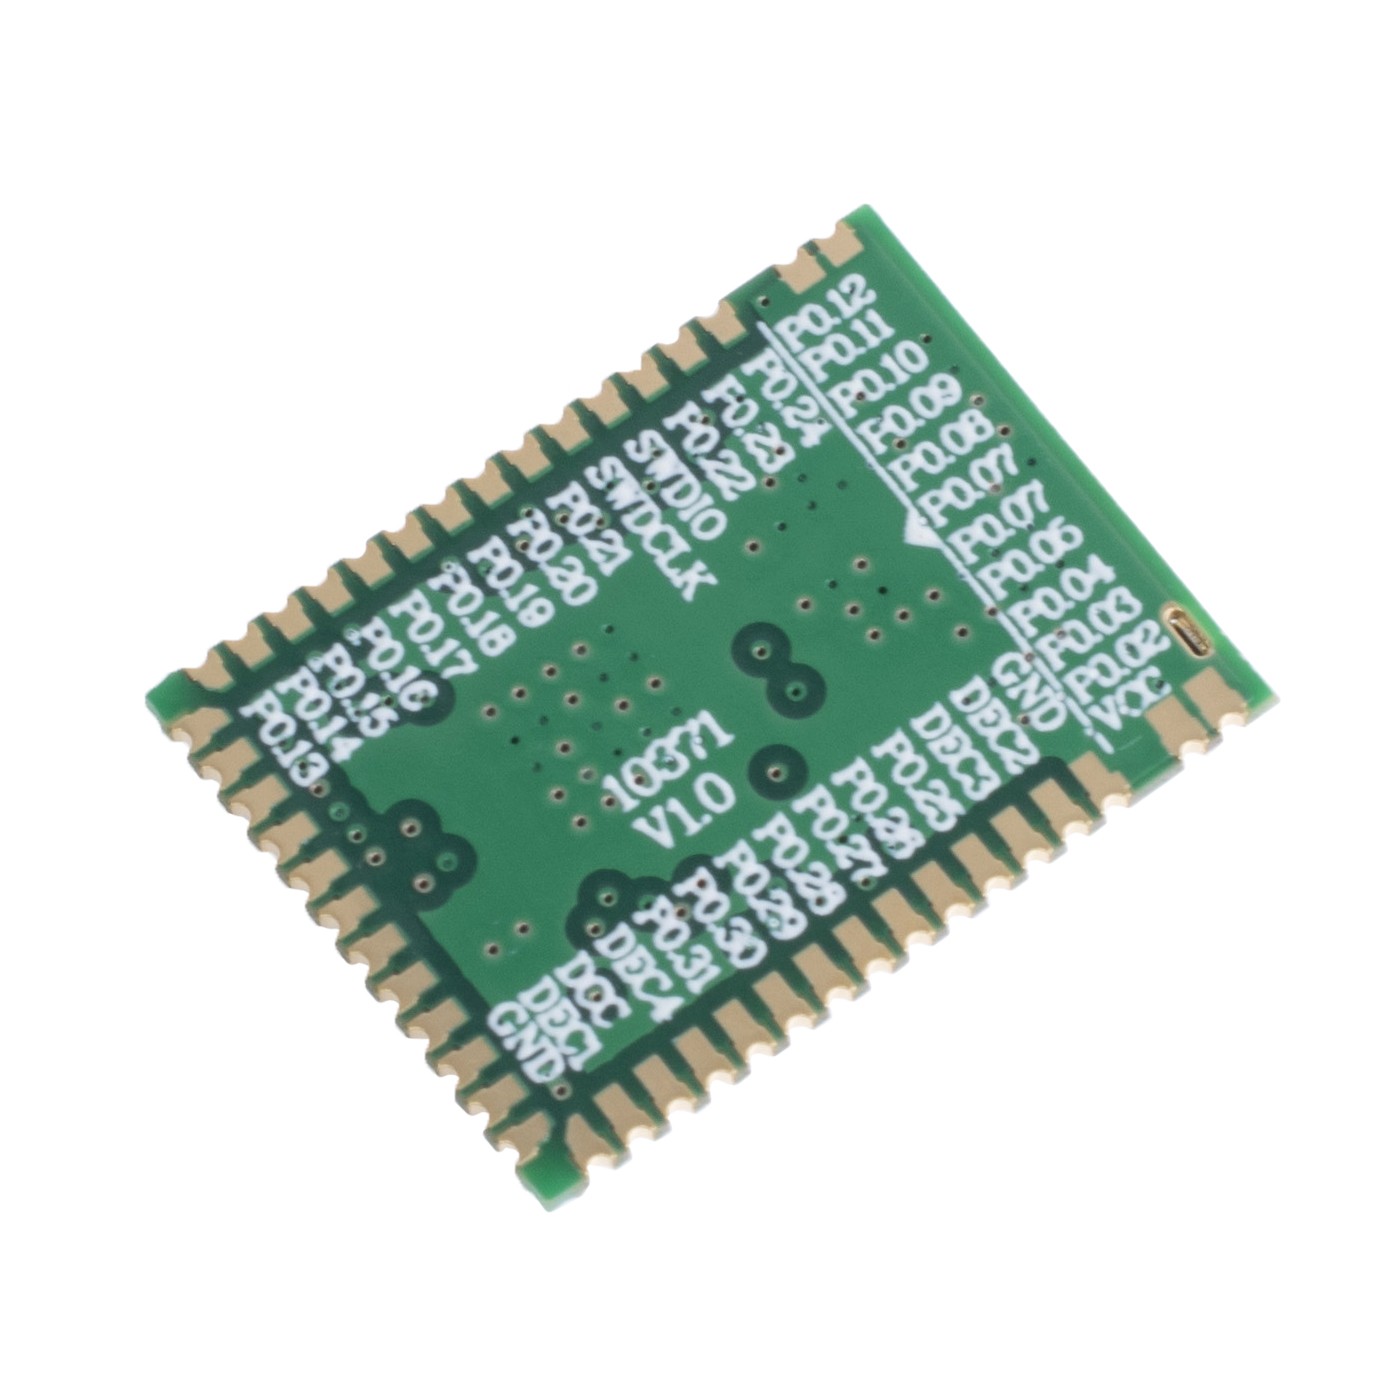 E73-2G4M04S1BX (Ebyte) Bluetooth/SoC module on chip nRF52832 2.4GHz/BT4.2/BLE5.0 SMD